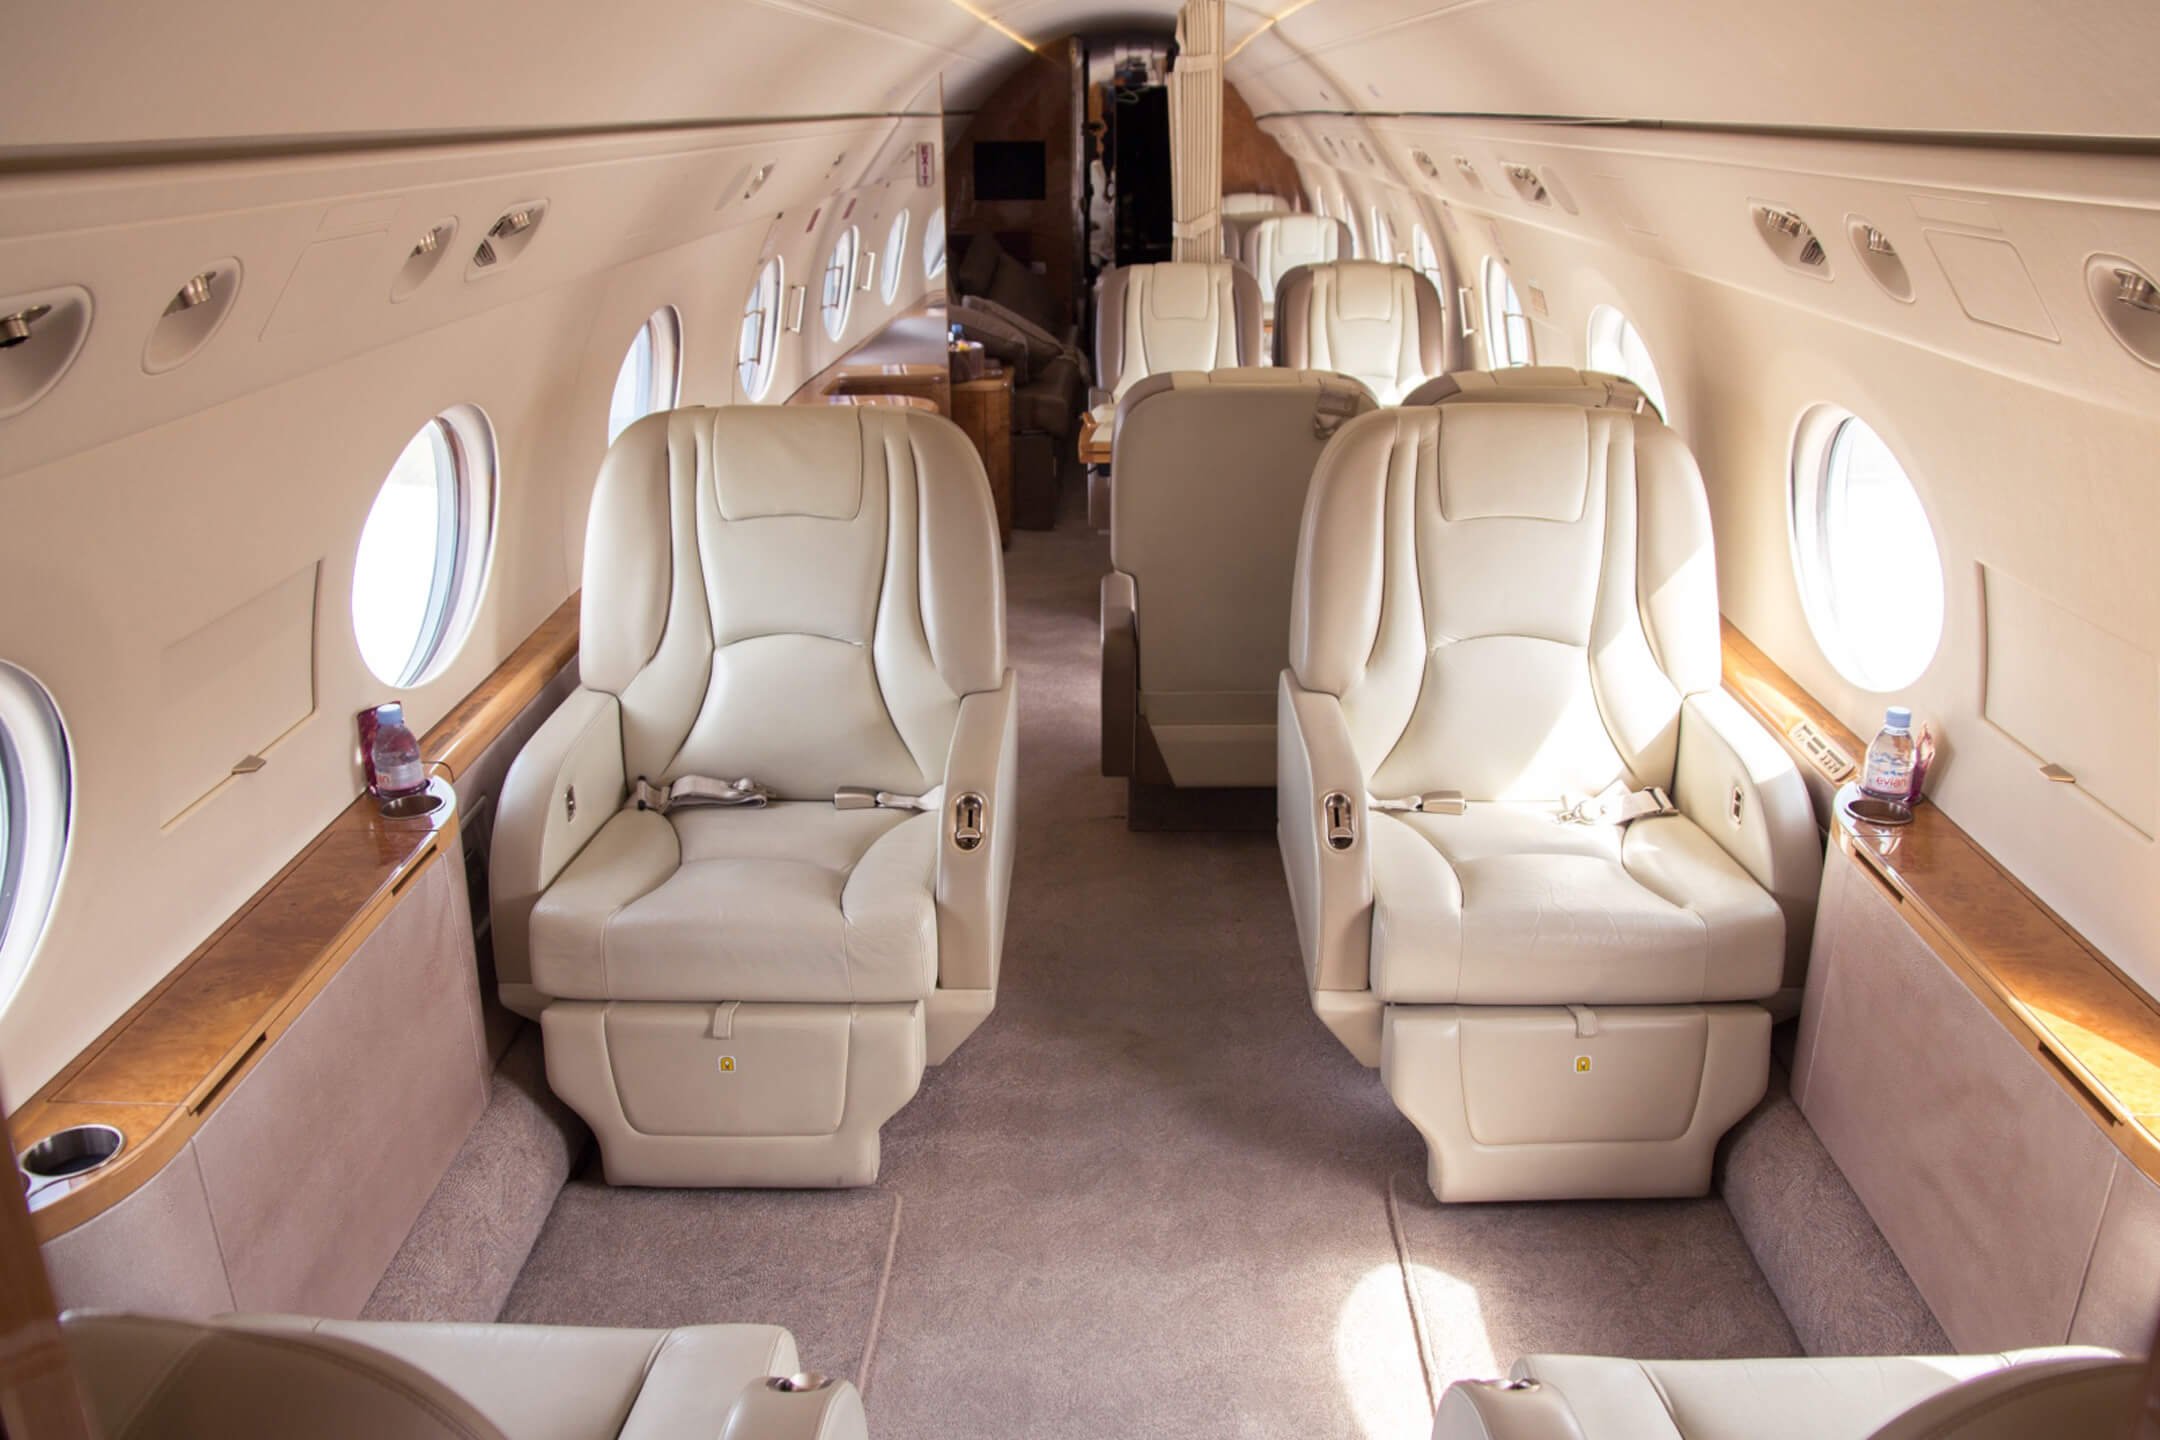 Cabin of a private jet